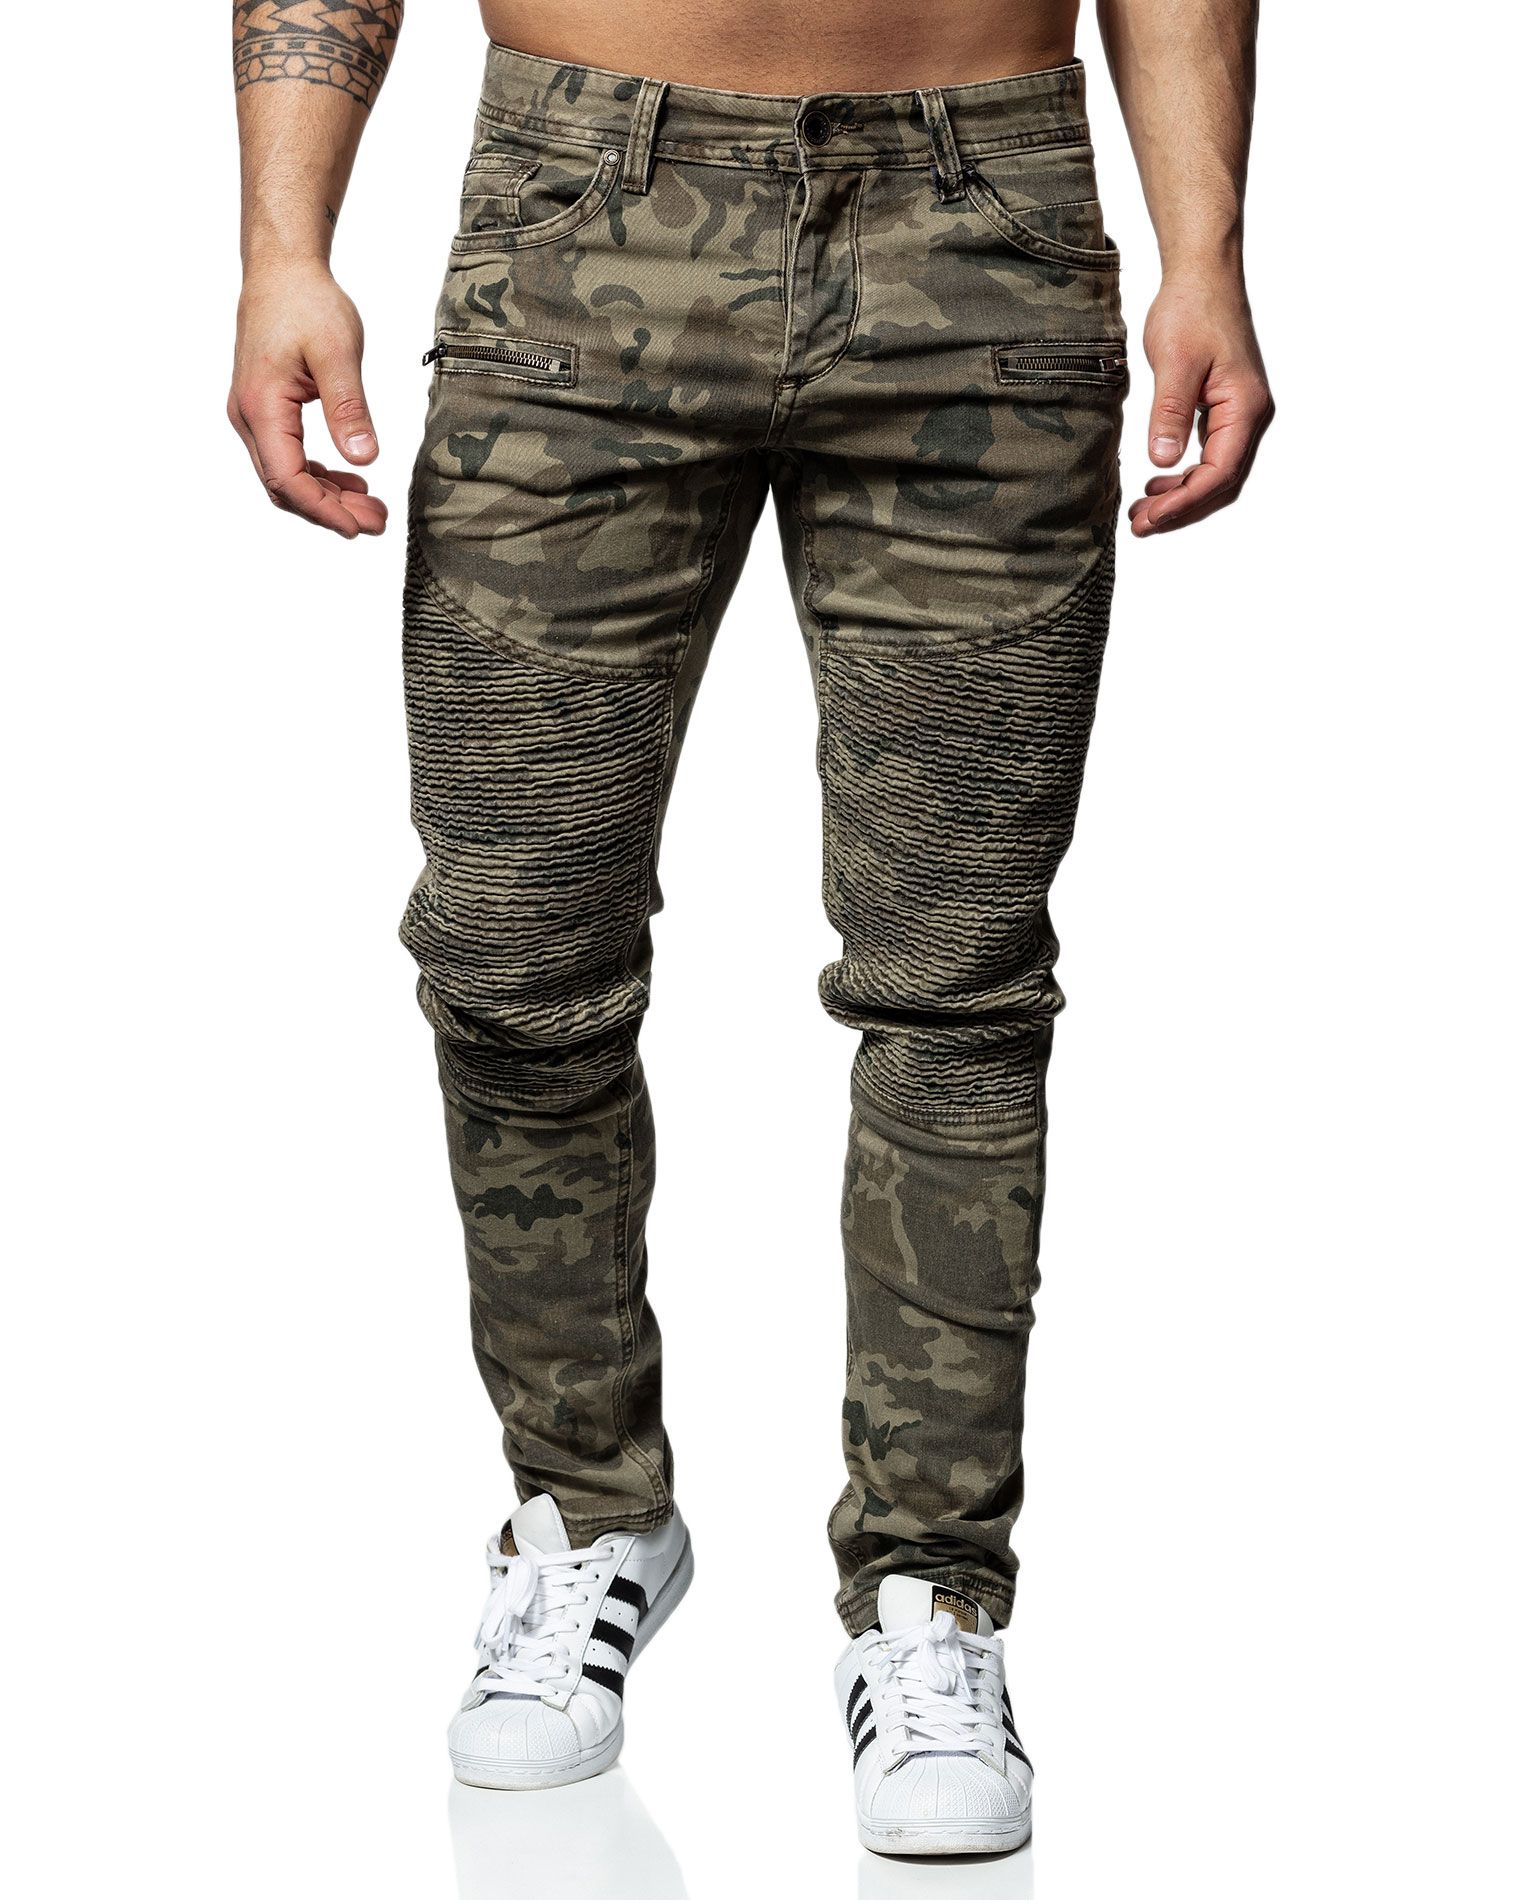 Vex Army Jeans L32 Trueprodigy - 3101 - Jeans - Jerone.com